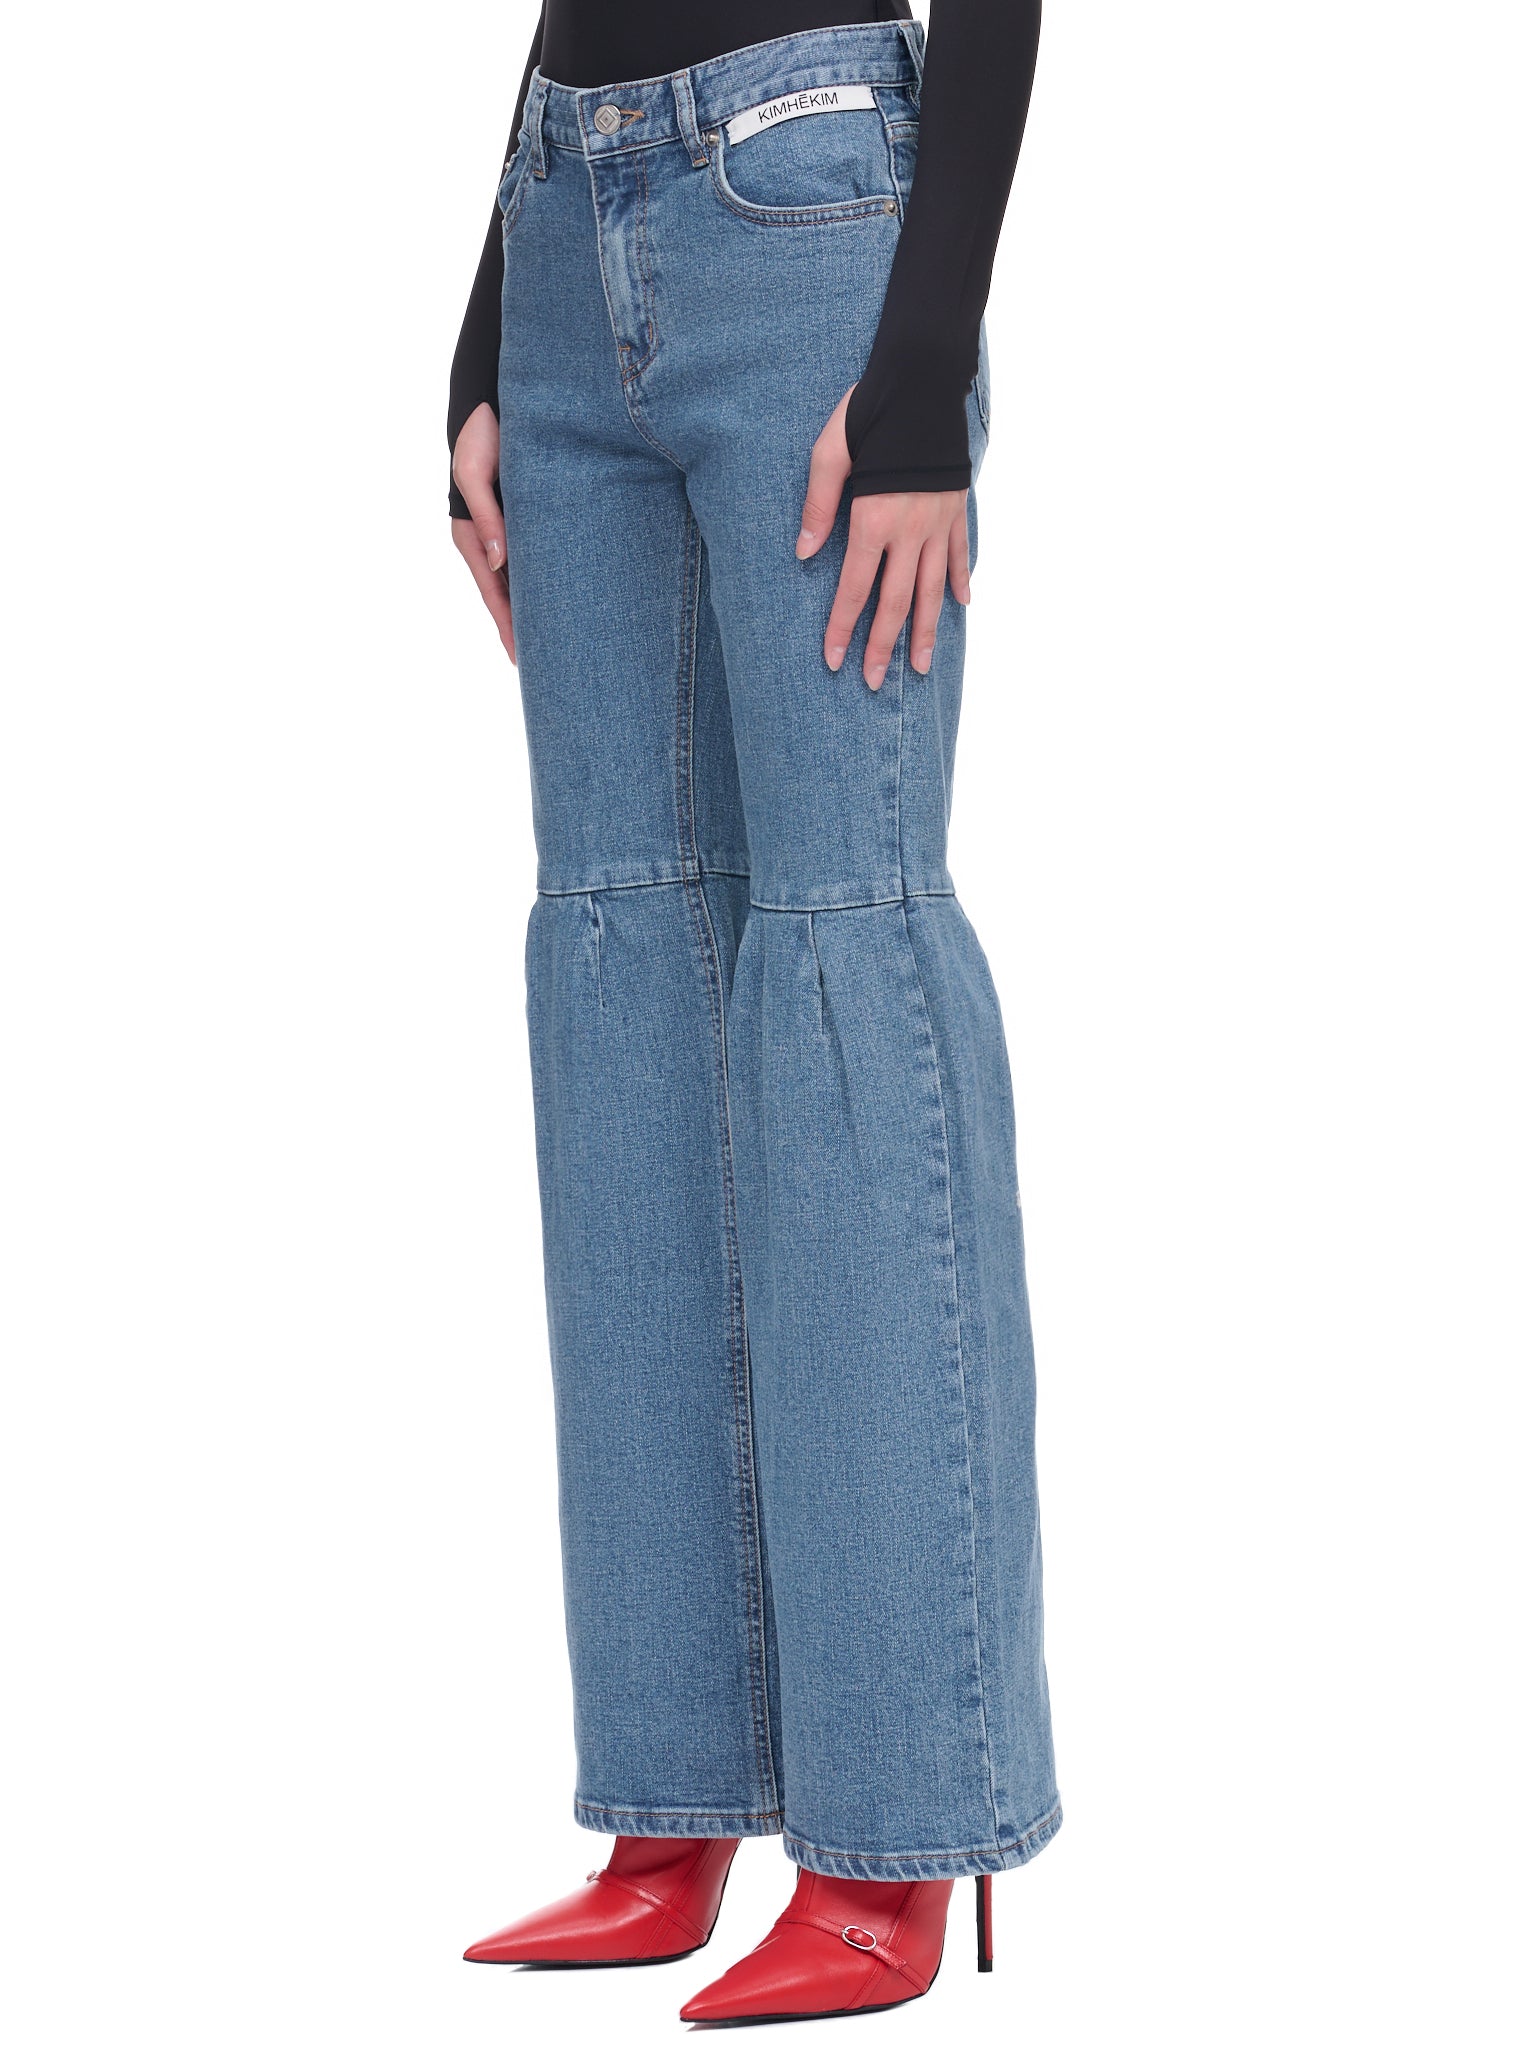 Bella Jeans (JN031-BL-BLUE)